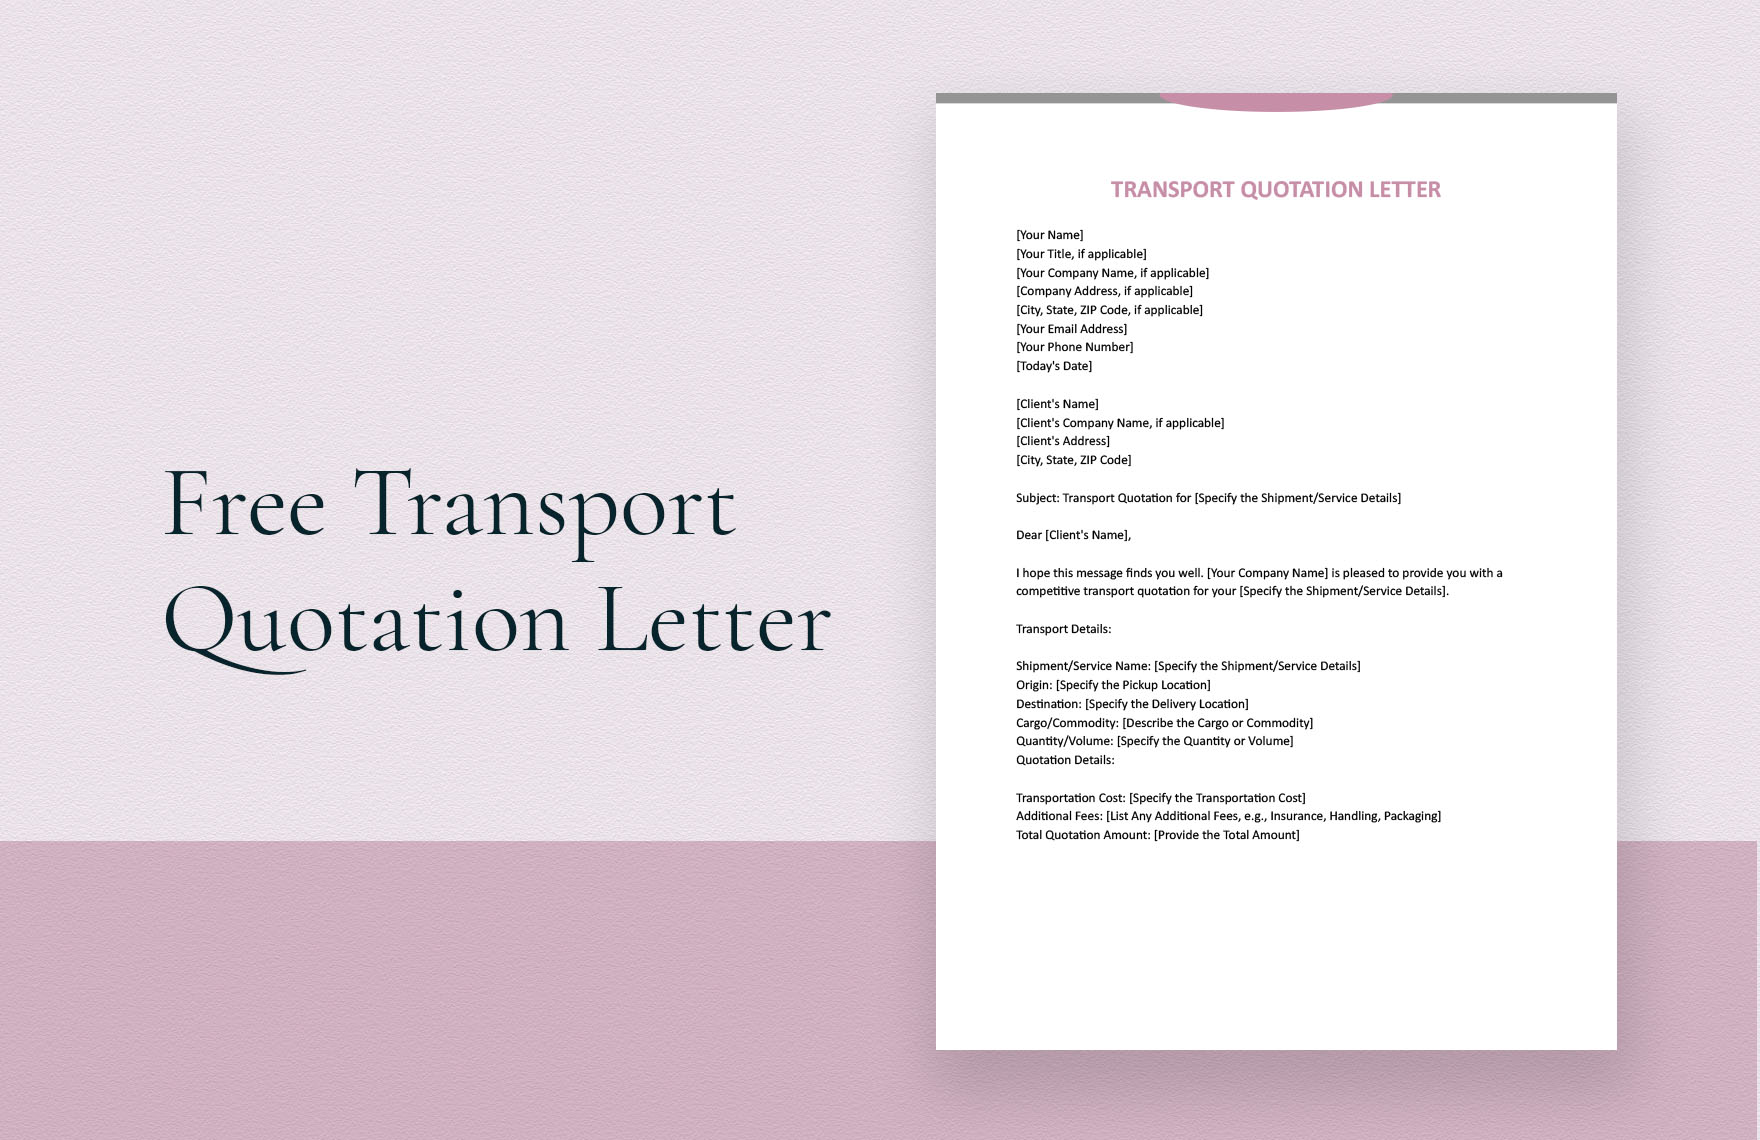 Transport Quotation Letter